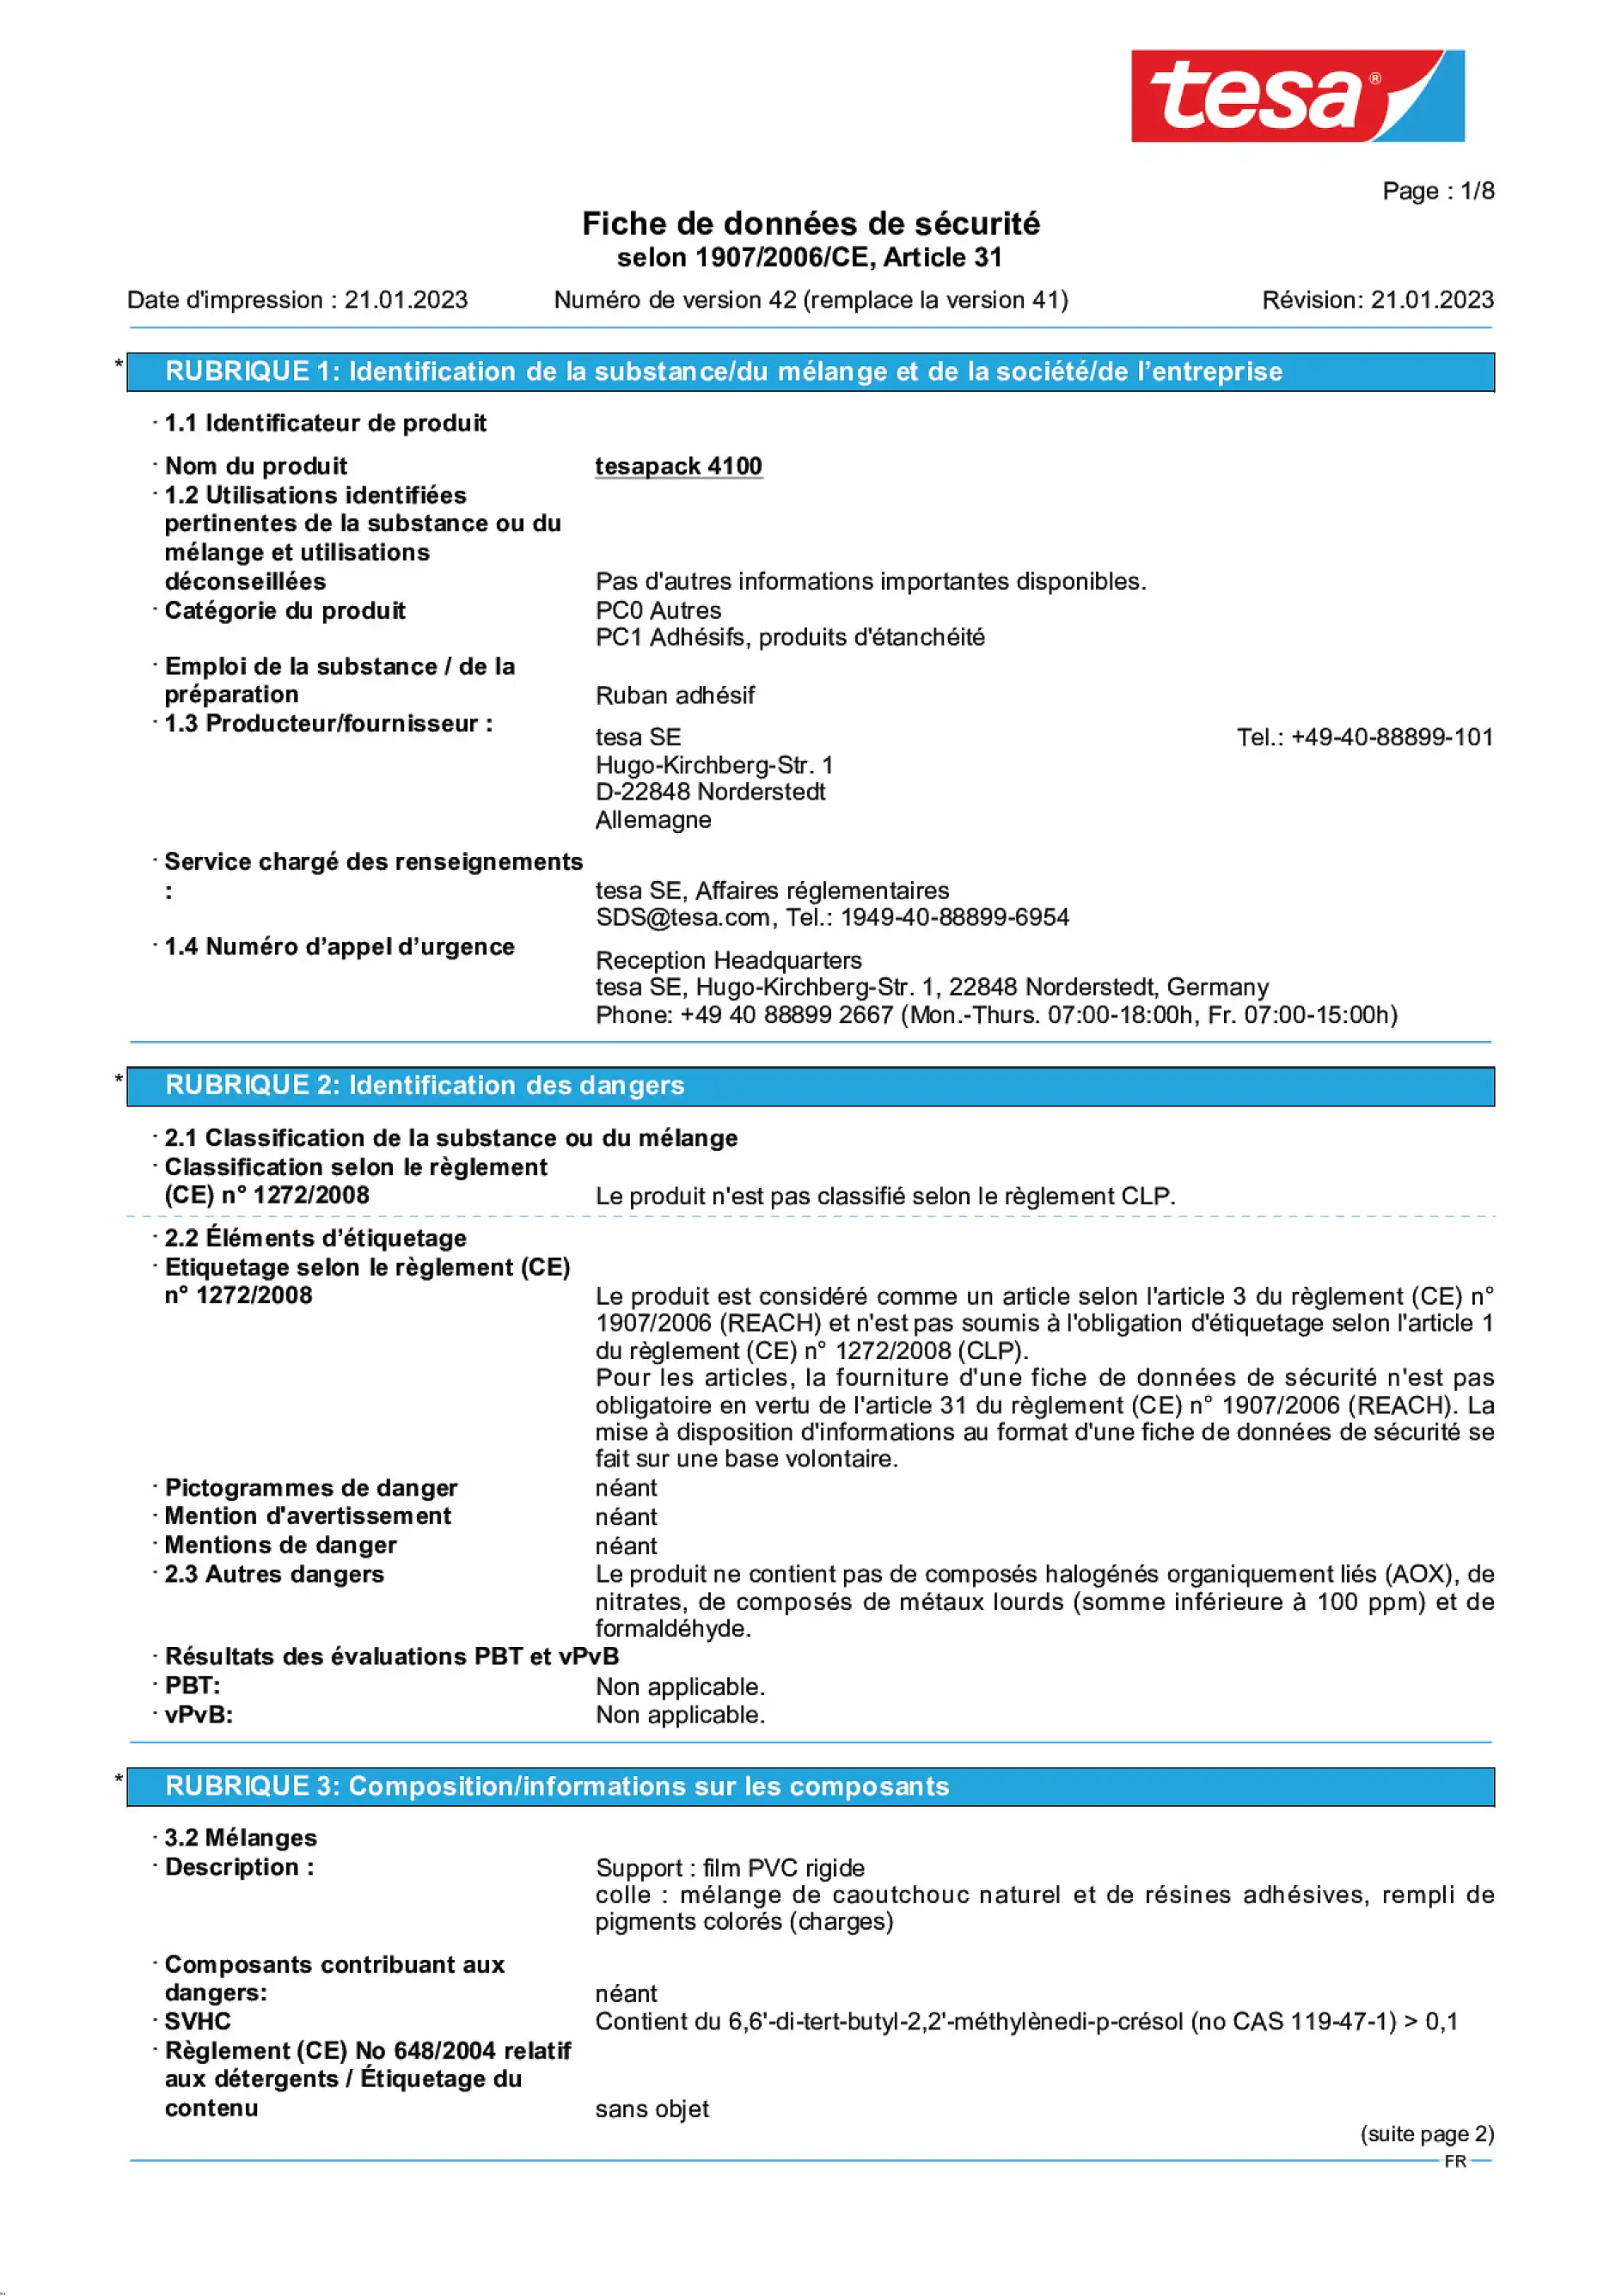 Safety data sheet_tesa® 04100_fr-FR_v42